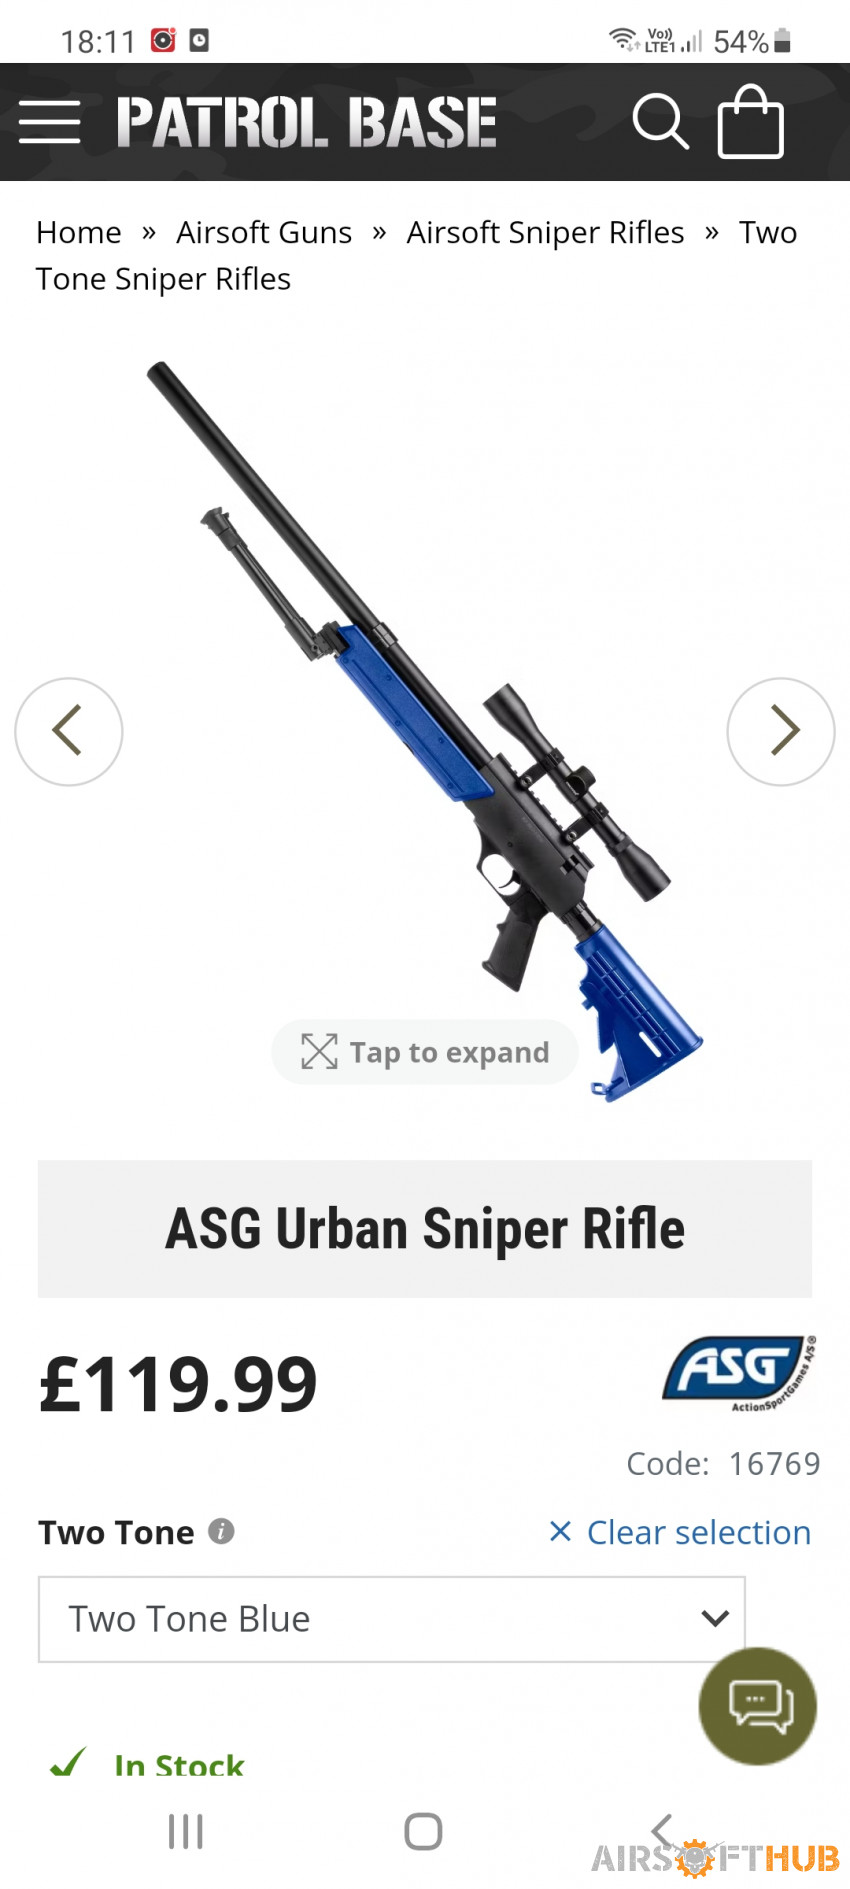 ASG urban sniper rifle - Used airsoft equipment